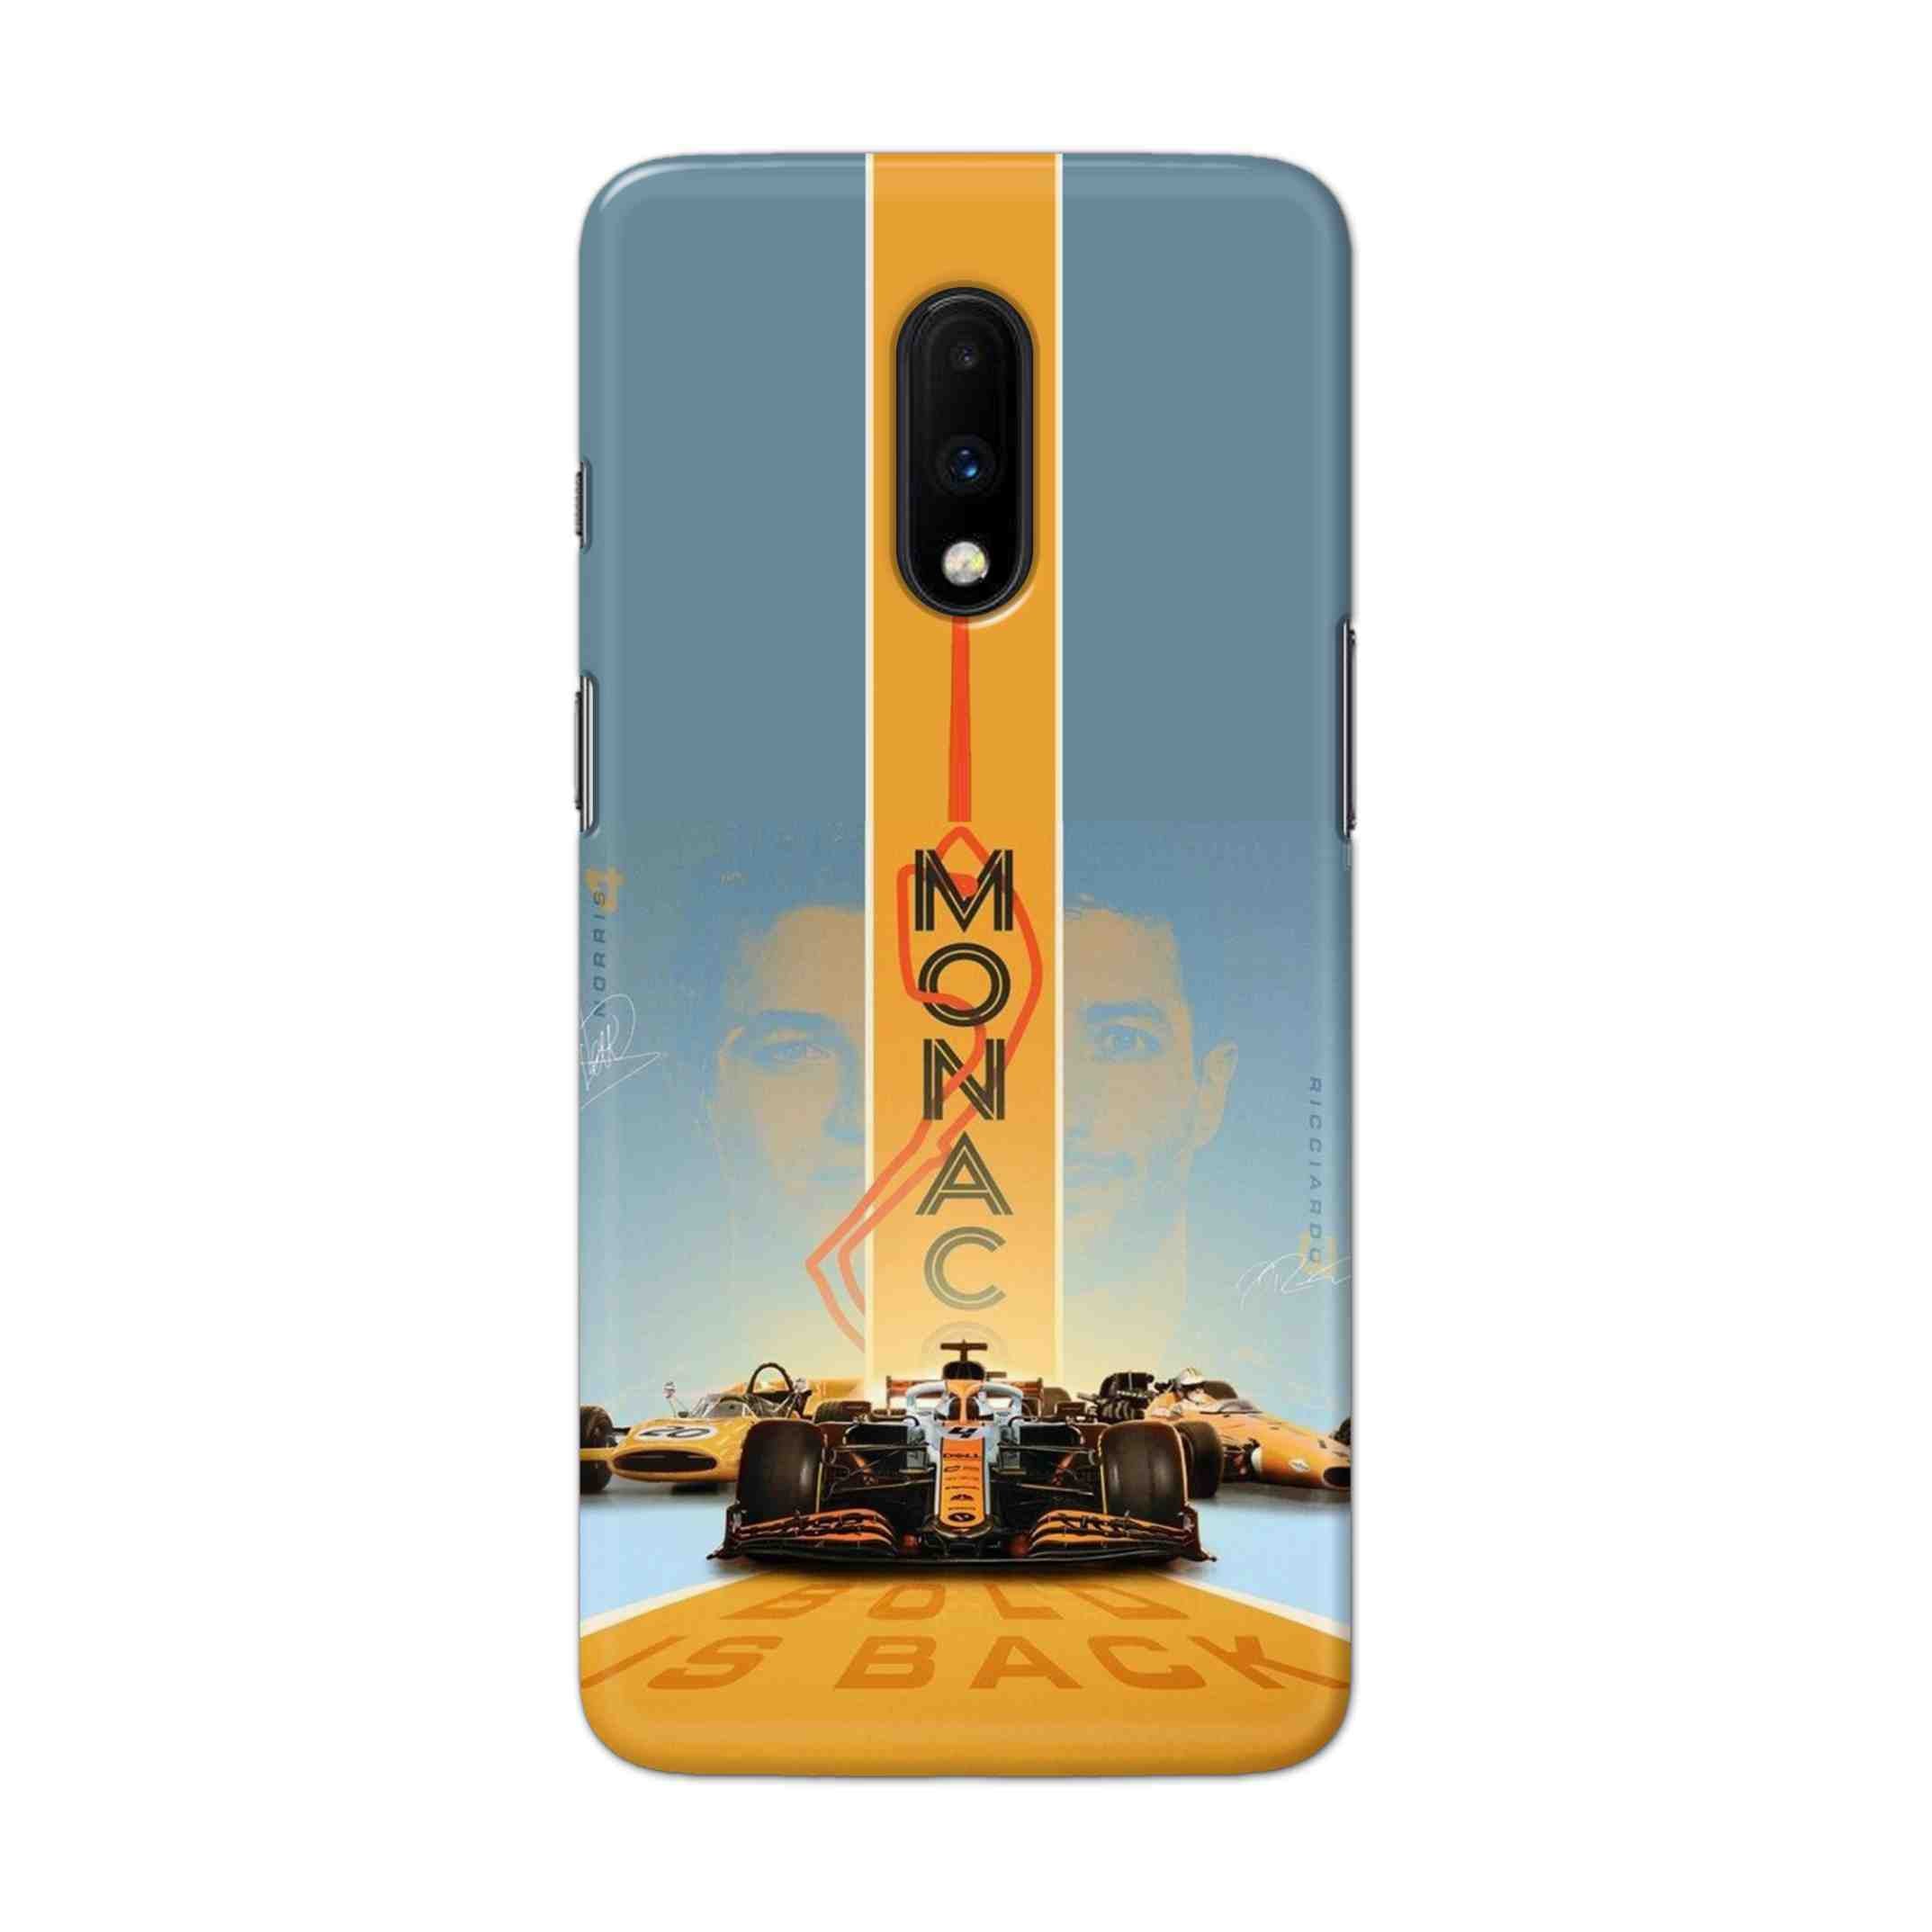 Buy Monac Formula Hard Back Mobile Phone Case Cover For OnePlus 7 Online